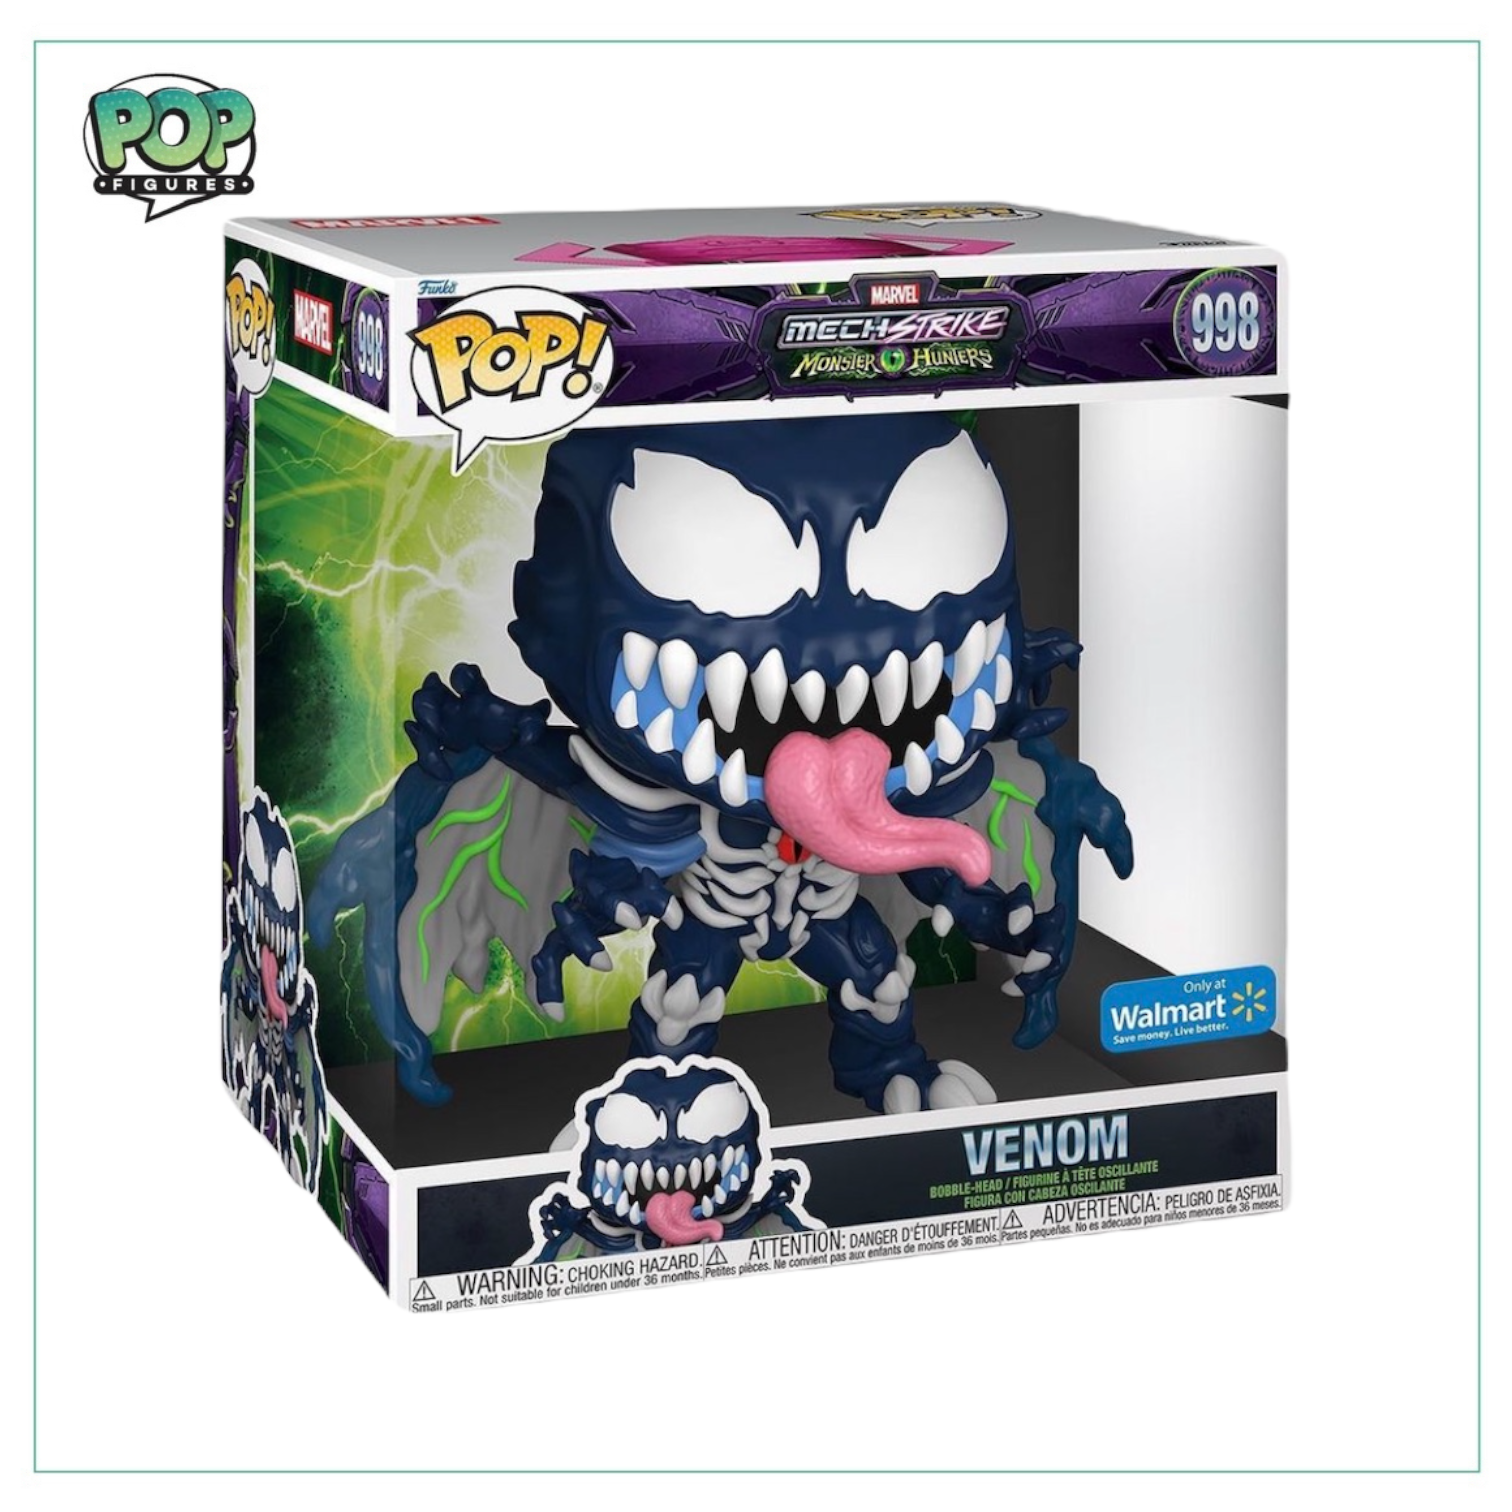 Venom #998 Deluxe 10" Funko Pop! Mech Strike Monster Hunters Soldier -  Walmart Exclusive